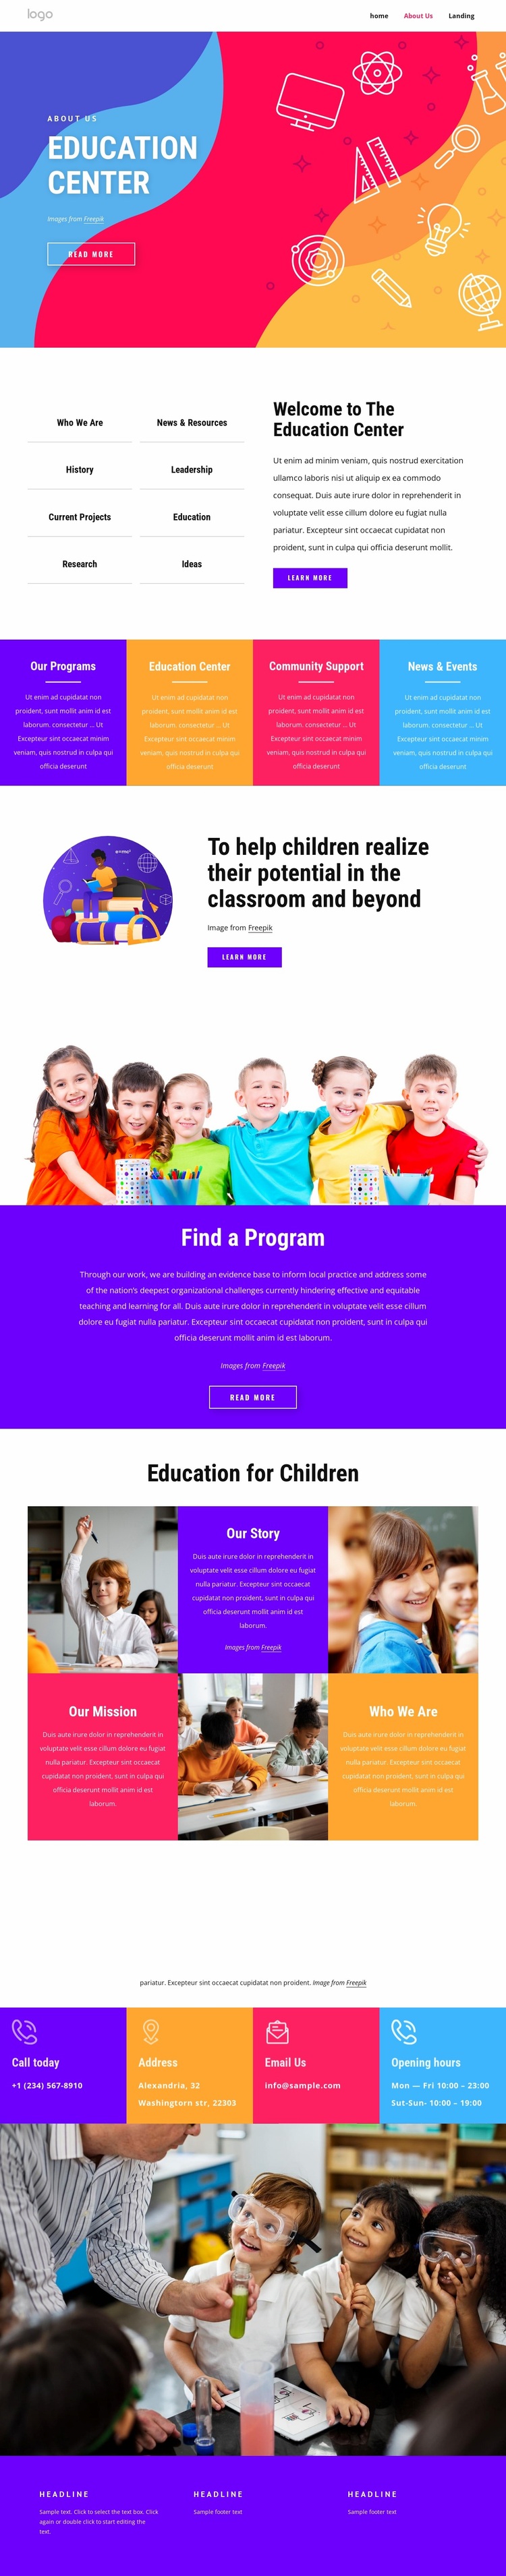 Family and education center Website Design